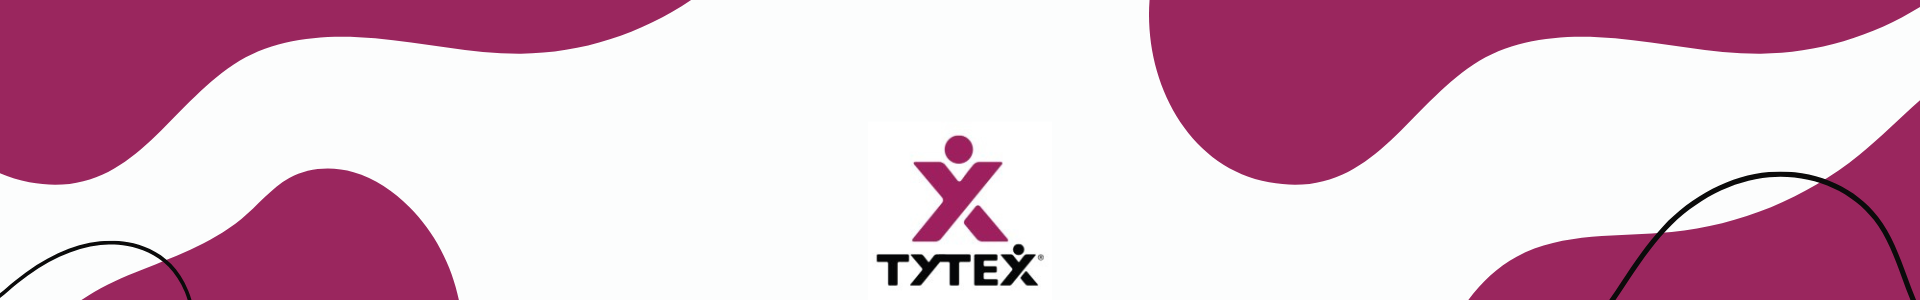 Marca Tytex